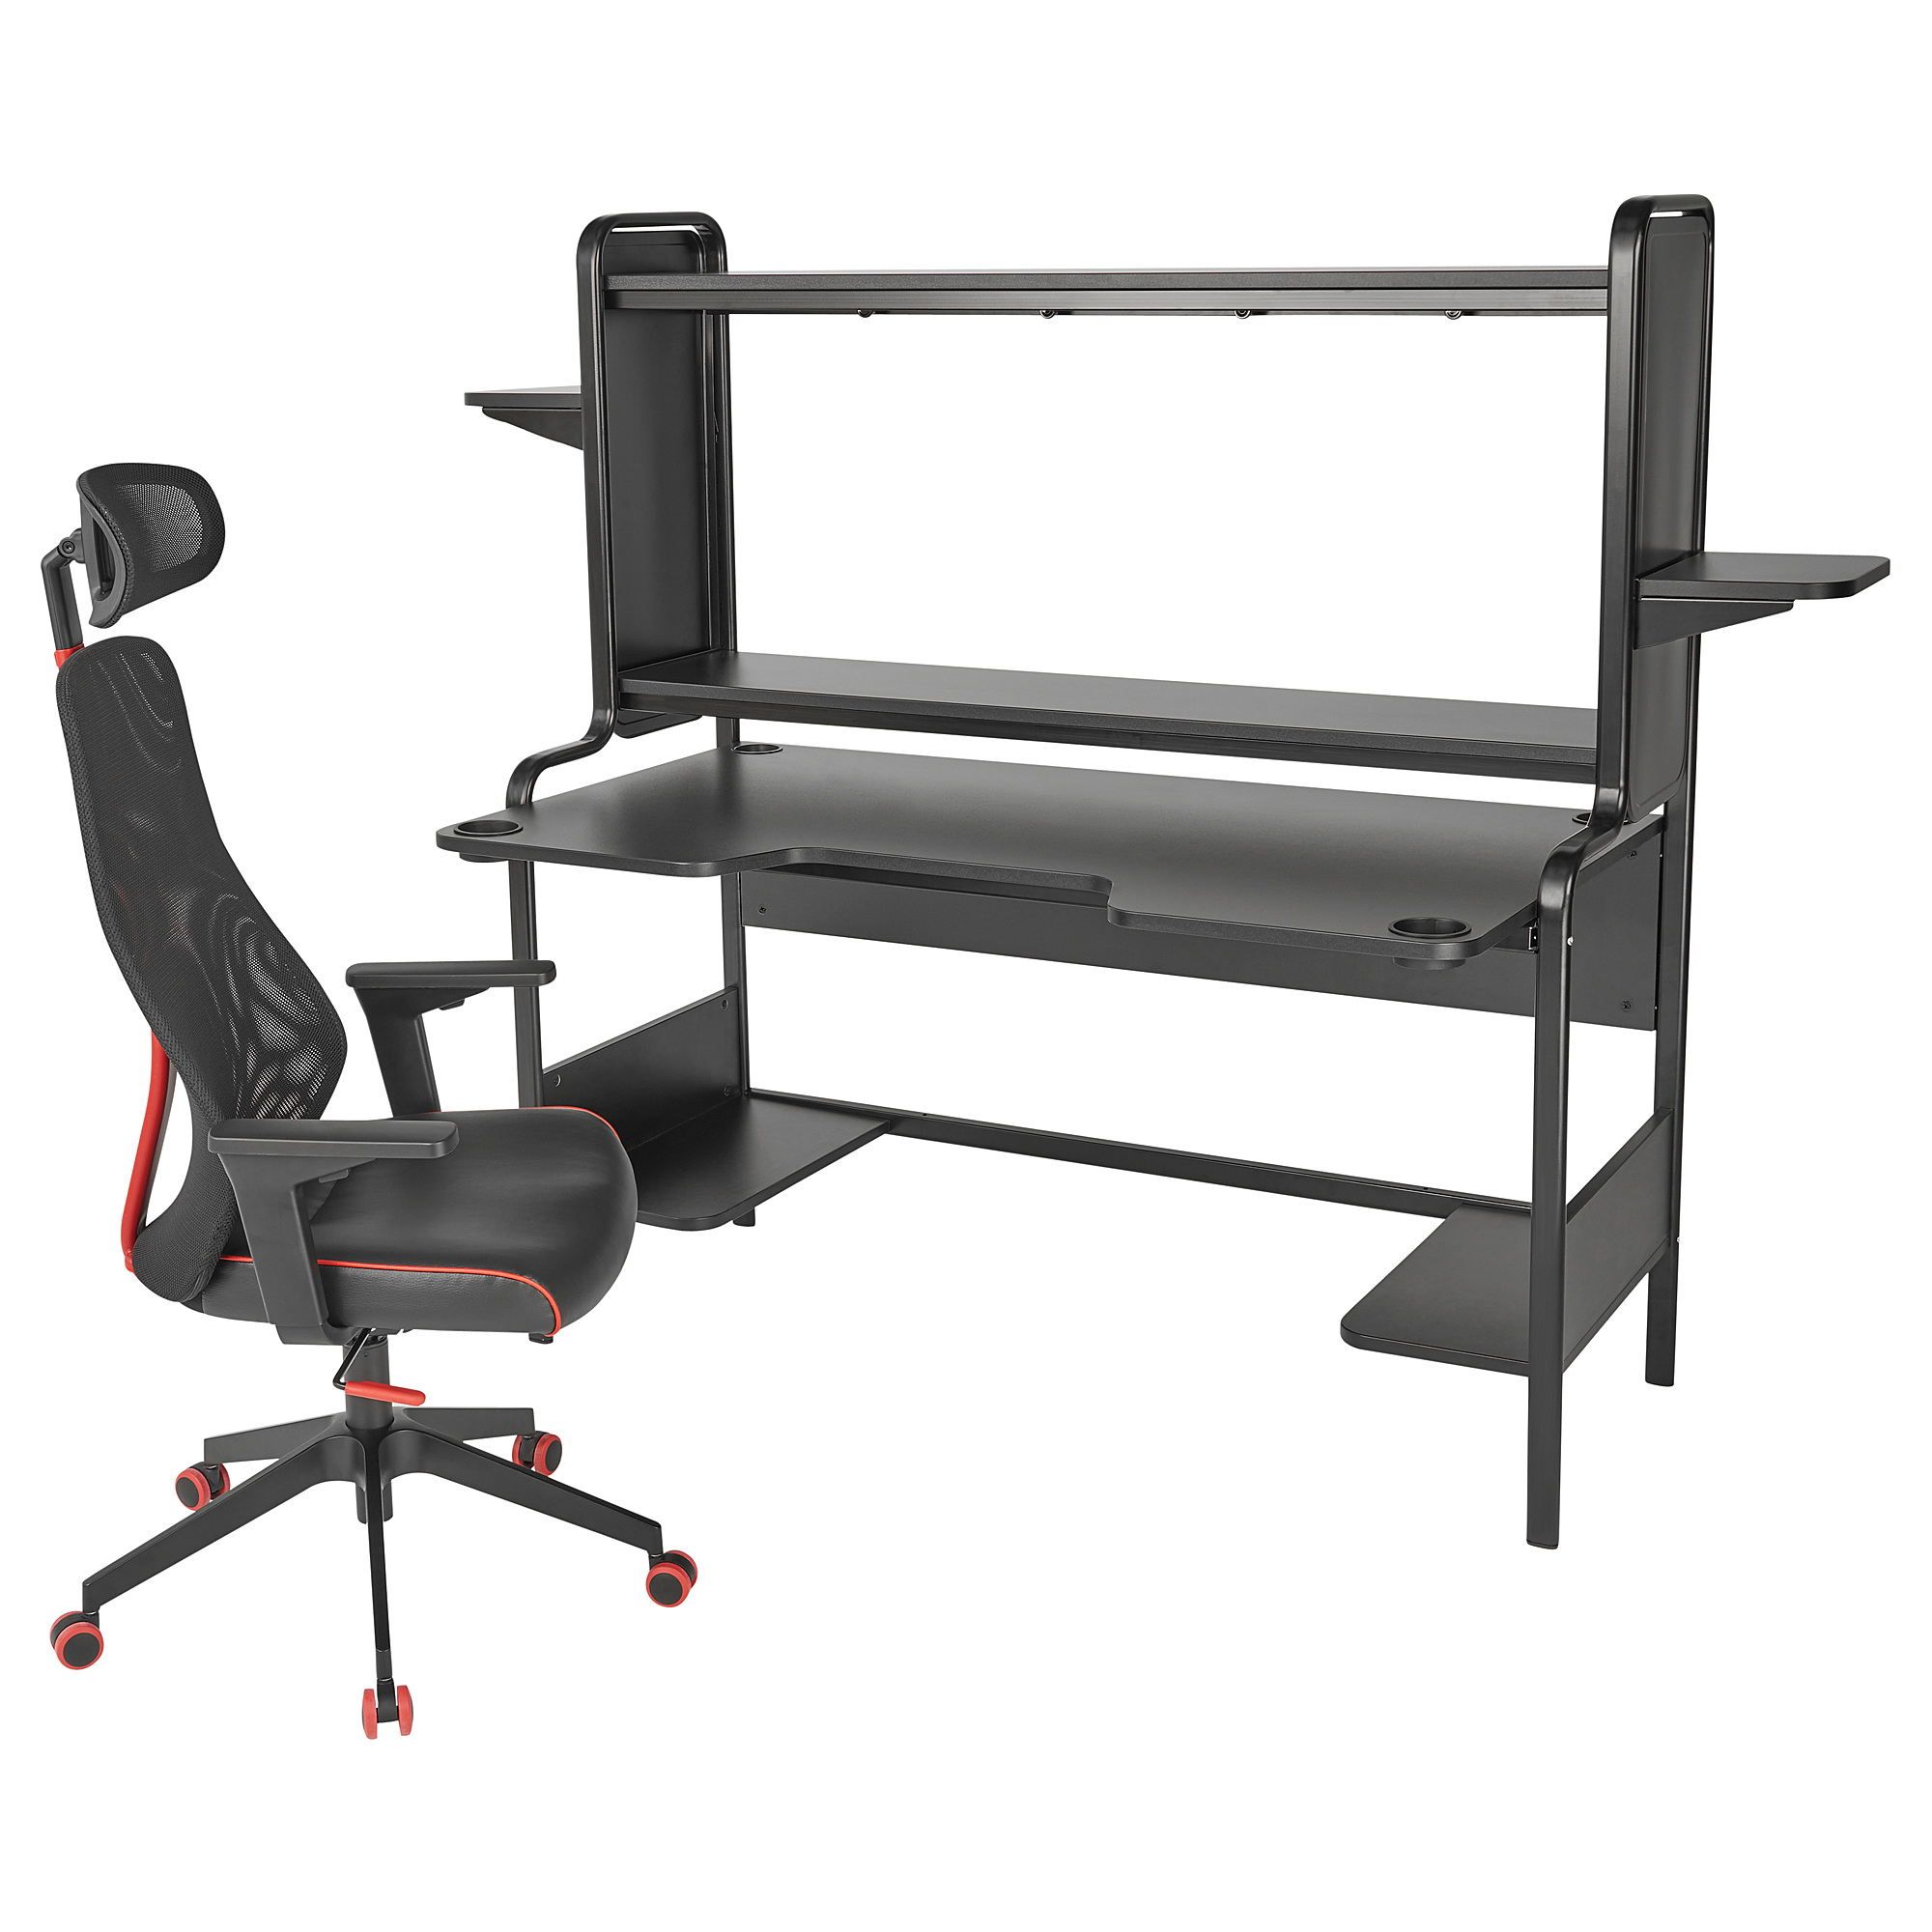 FREDDE/MATCHSPEL gaming desk and chair